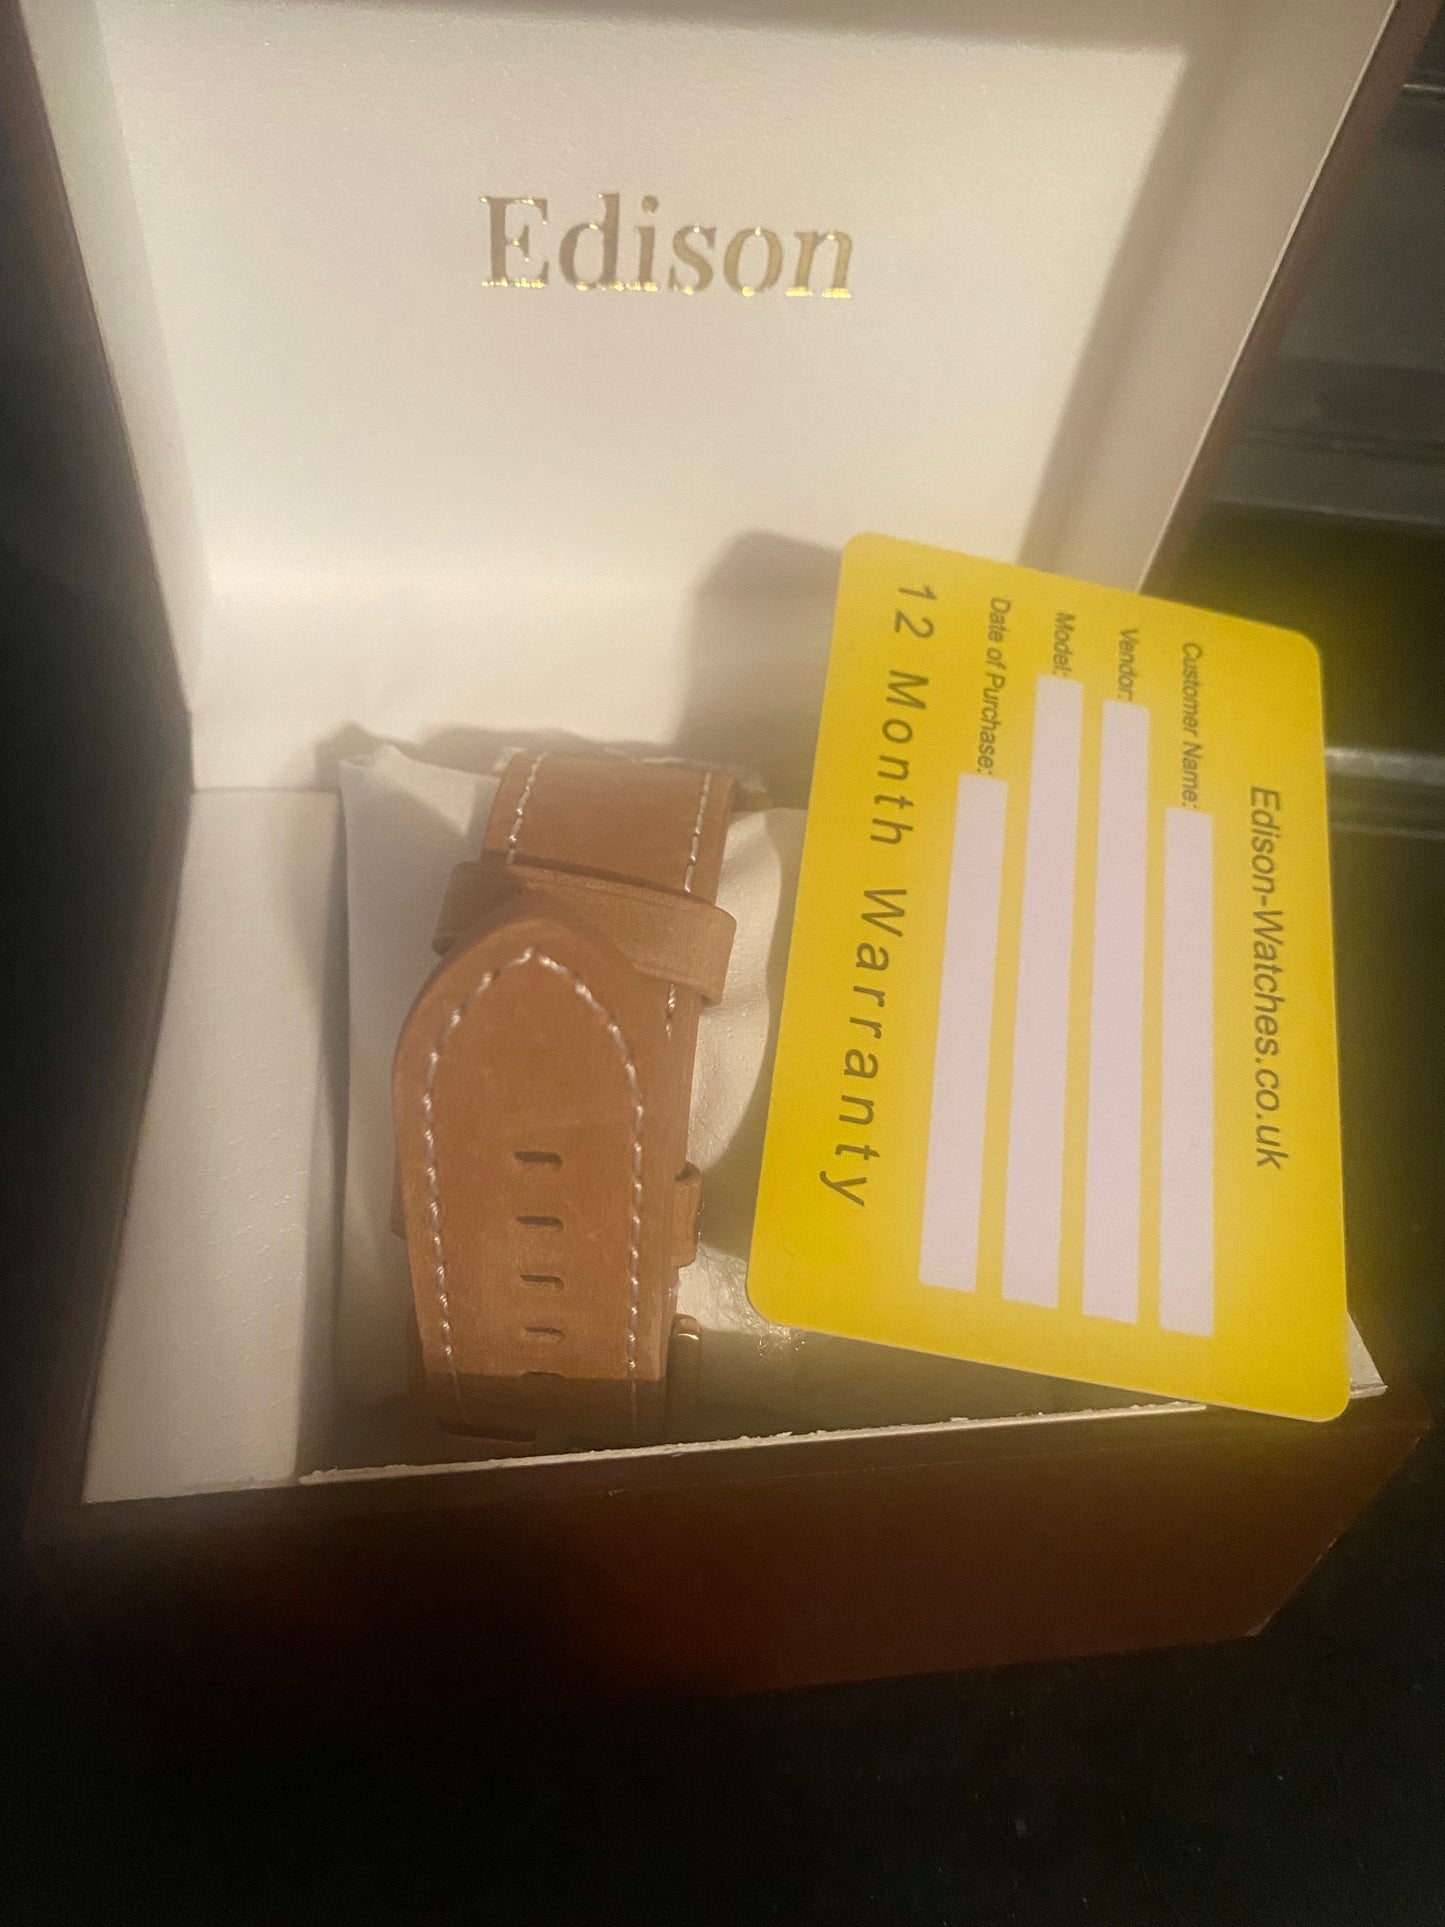 Edison Men Chronograph Watch, Rose Gold  w/Brown Strap-New